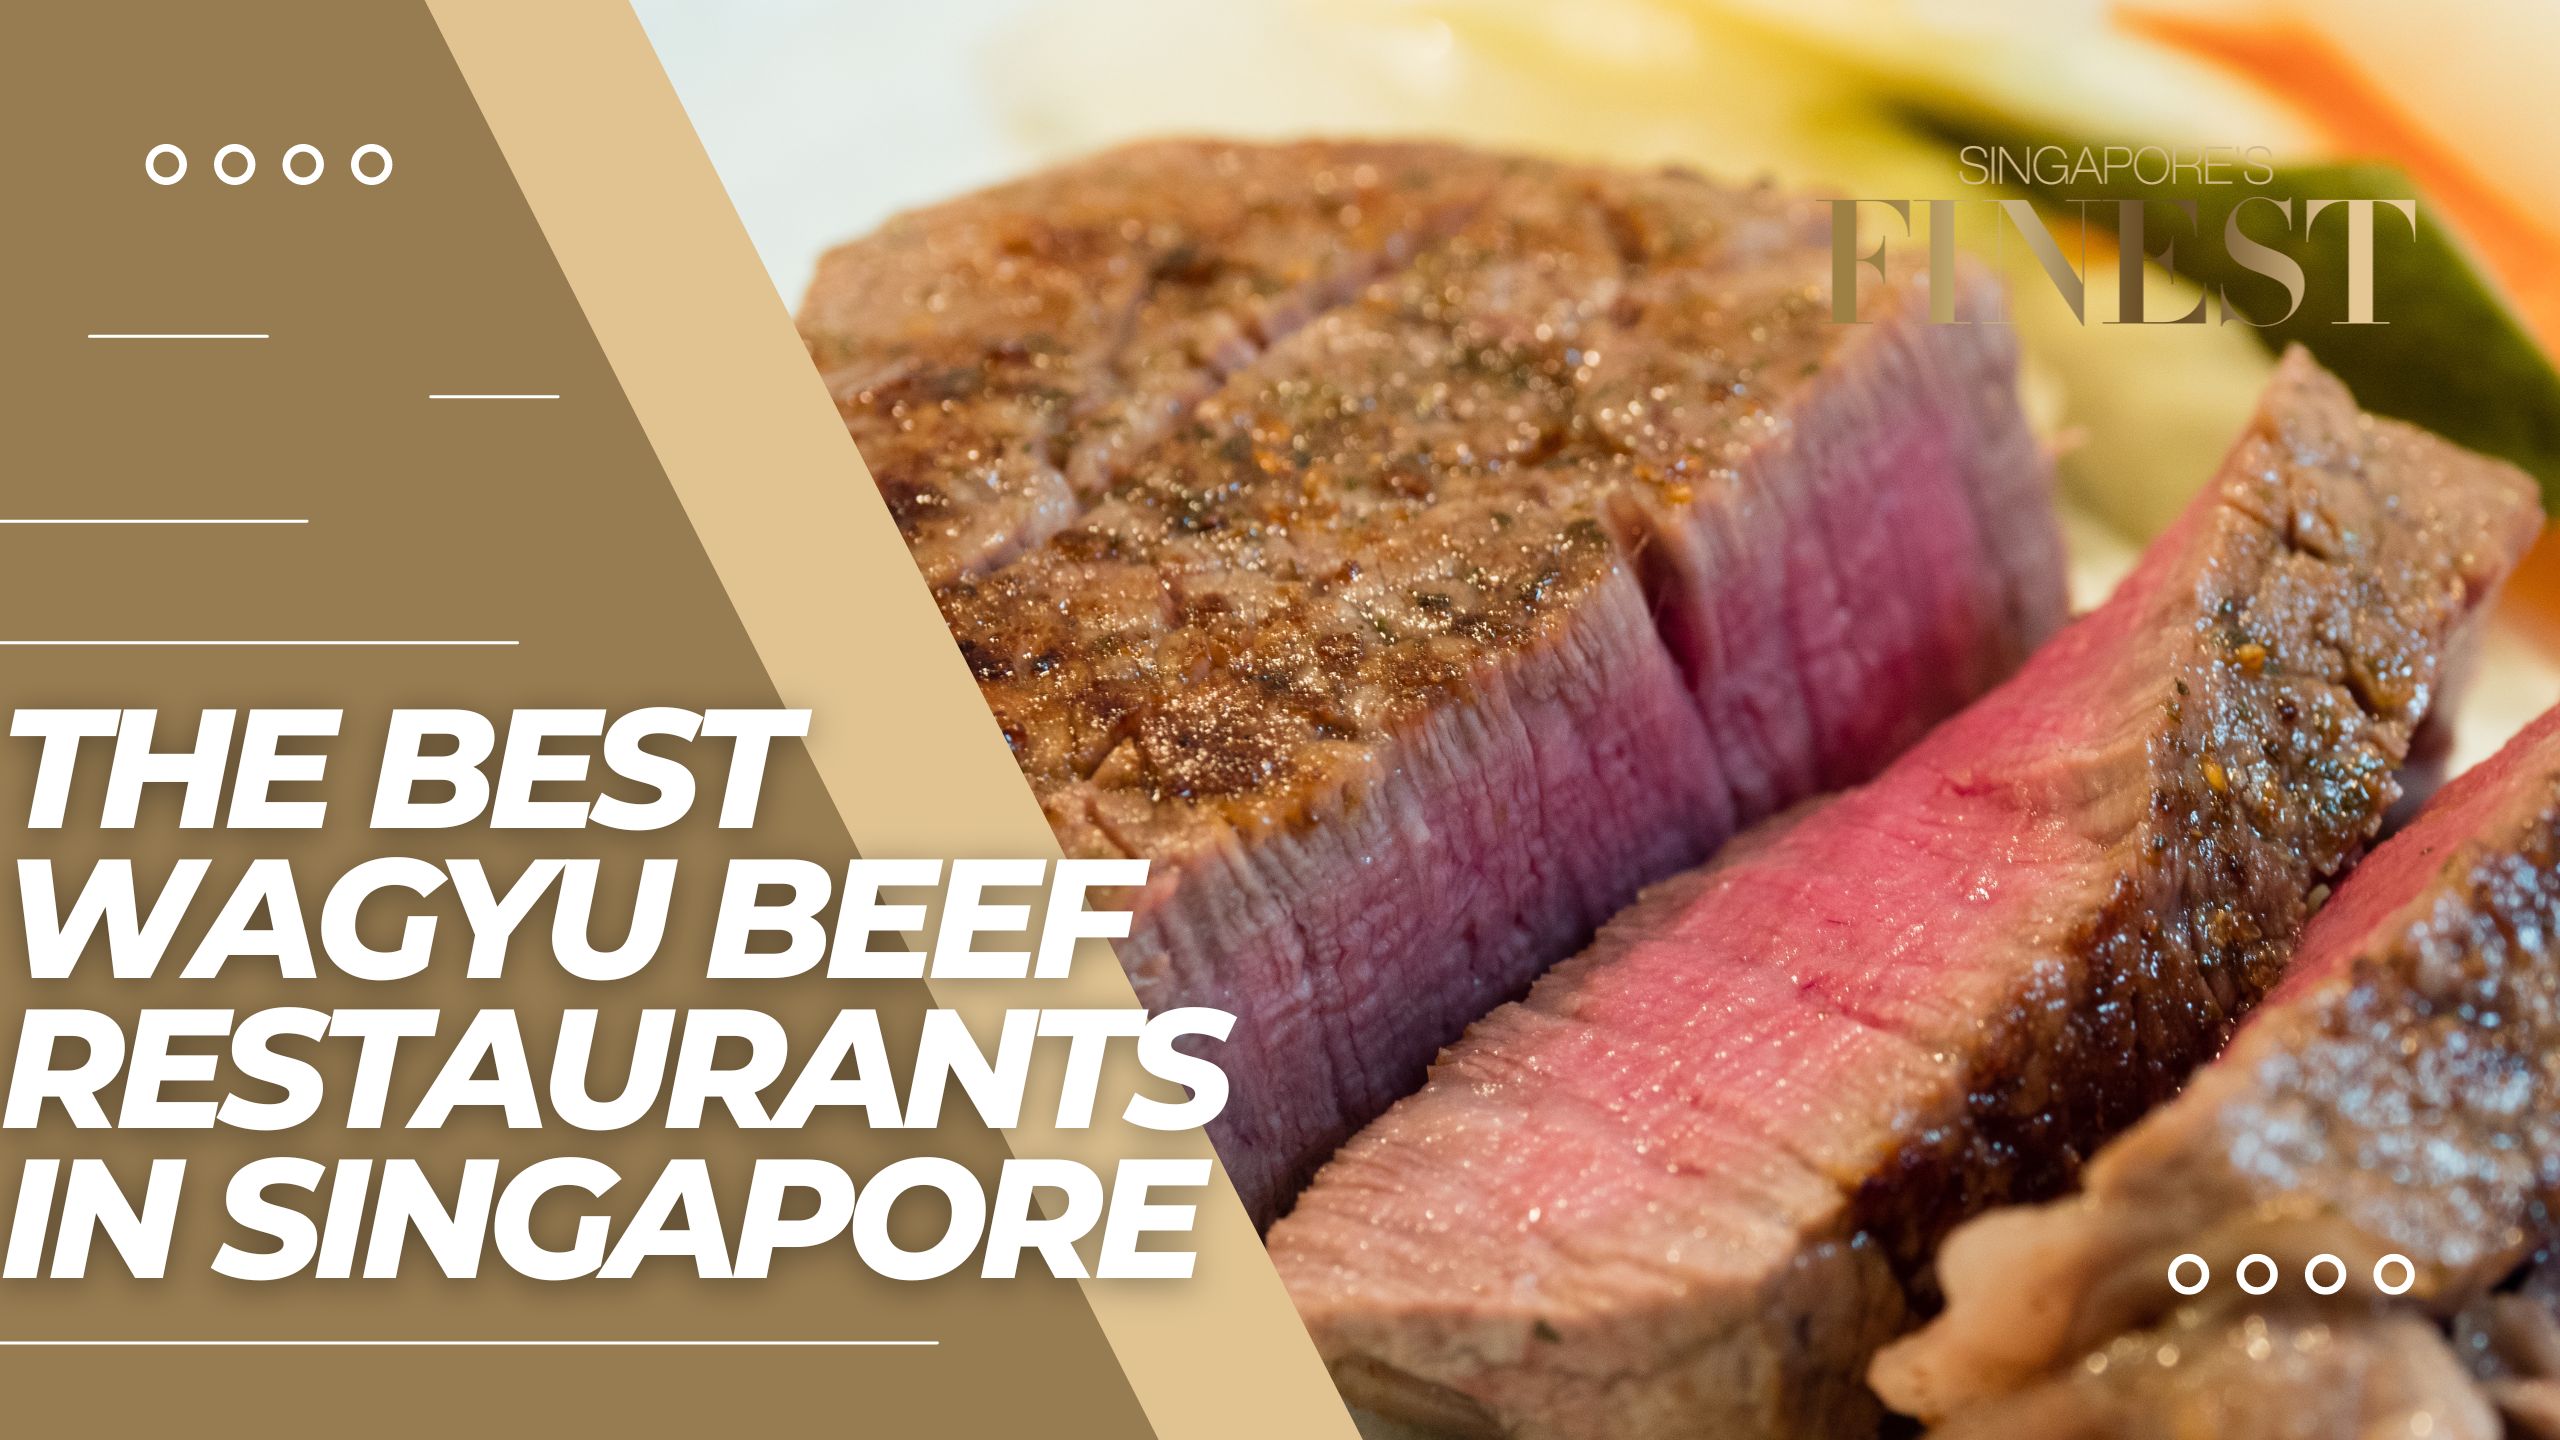 The Finest Wagyu Beef Restaurants in Singapore